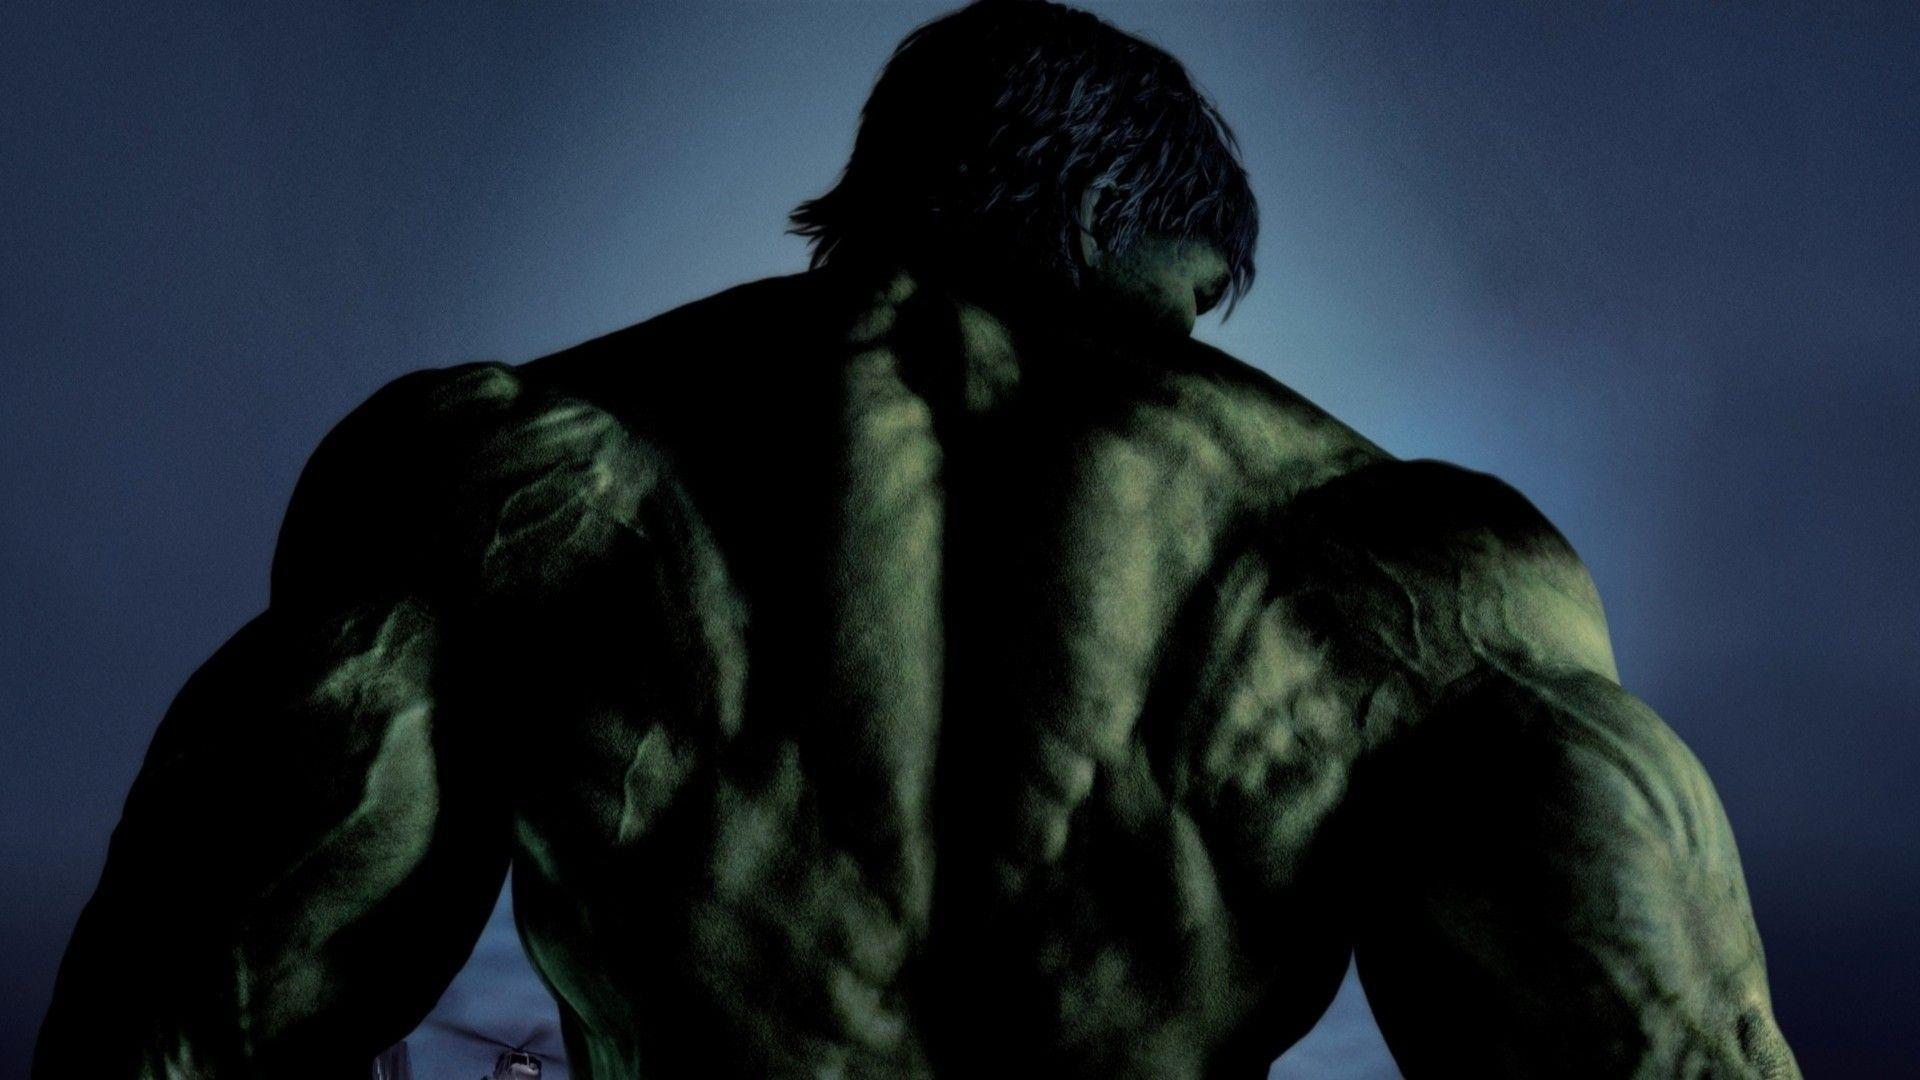 Hulk Smash Avengers HD Wallpaper, Background Image